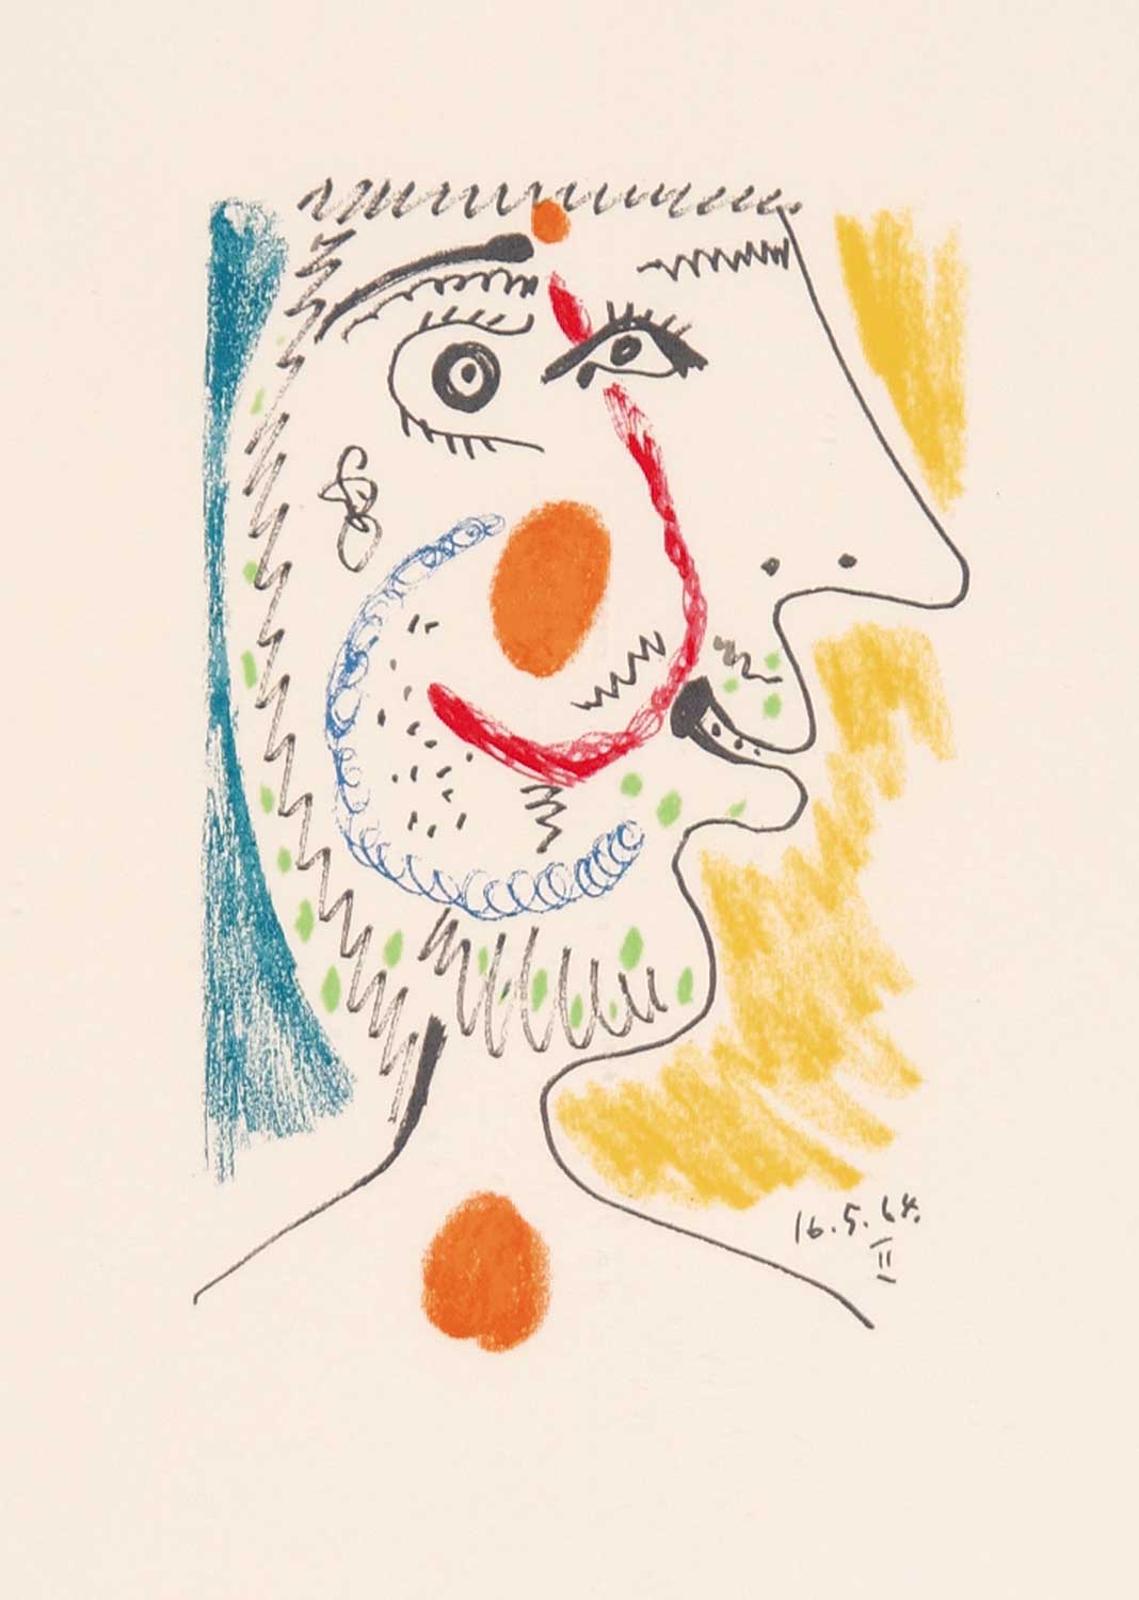 Pablo Ruiz Picasso (1881-1973) - Untitled - Portrait 16.5.64.II